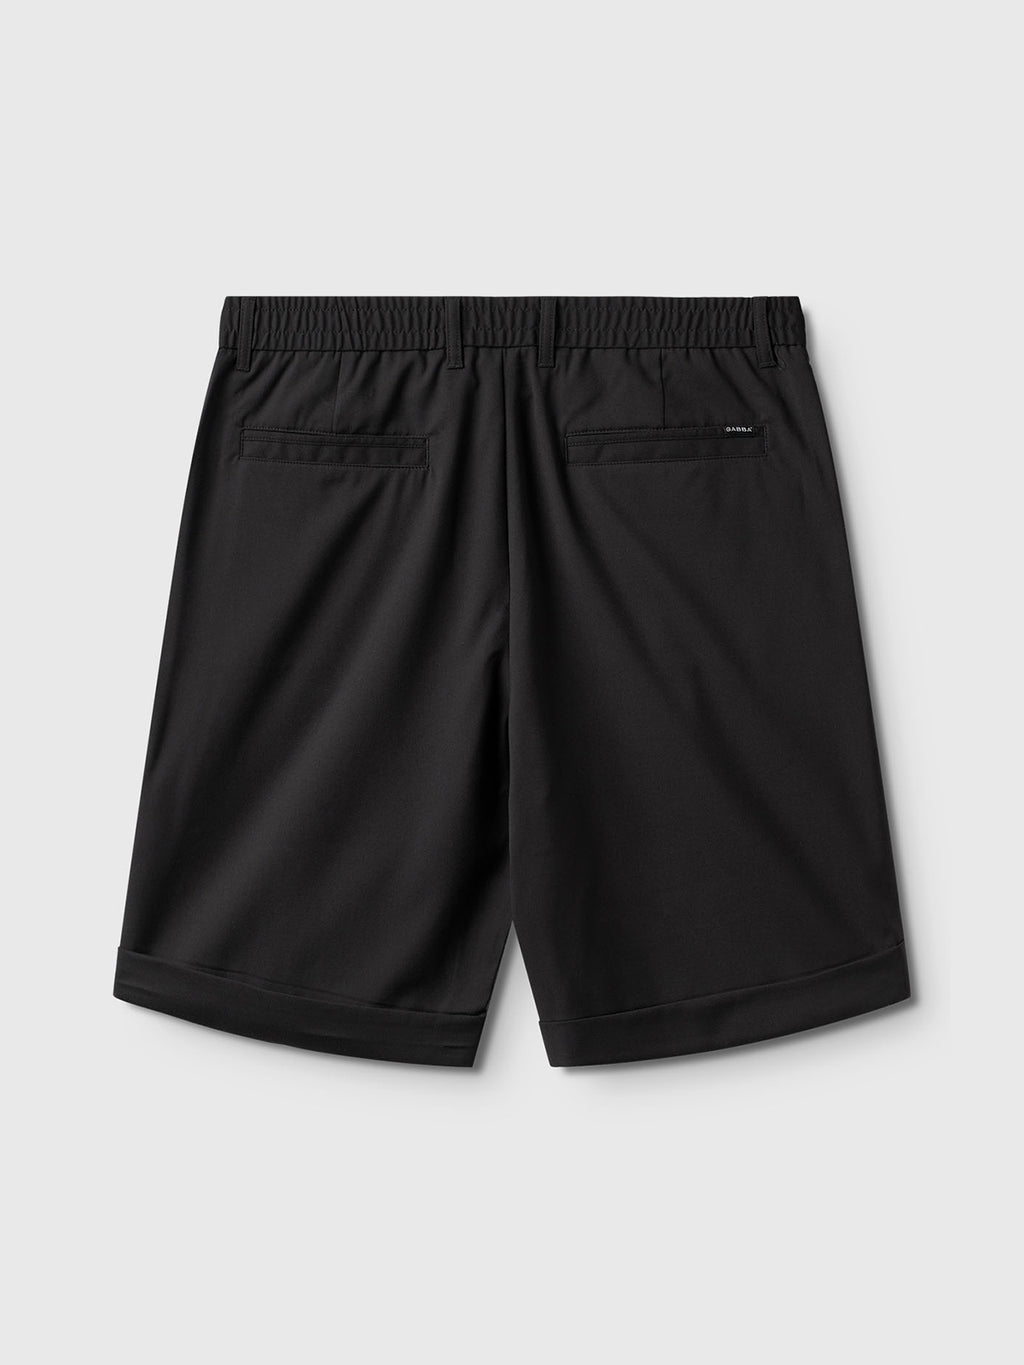 Monza Fin Shorts - Black